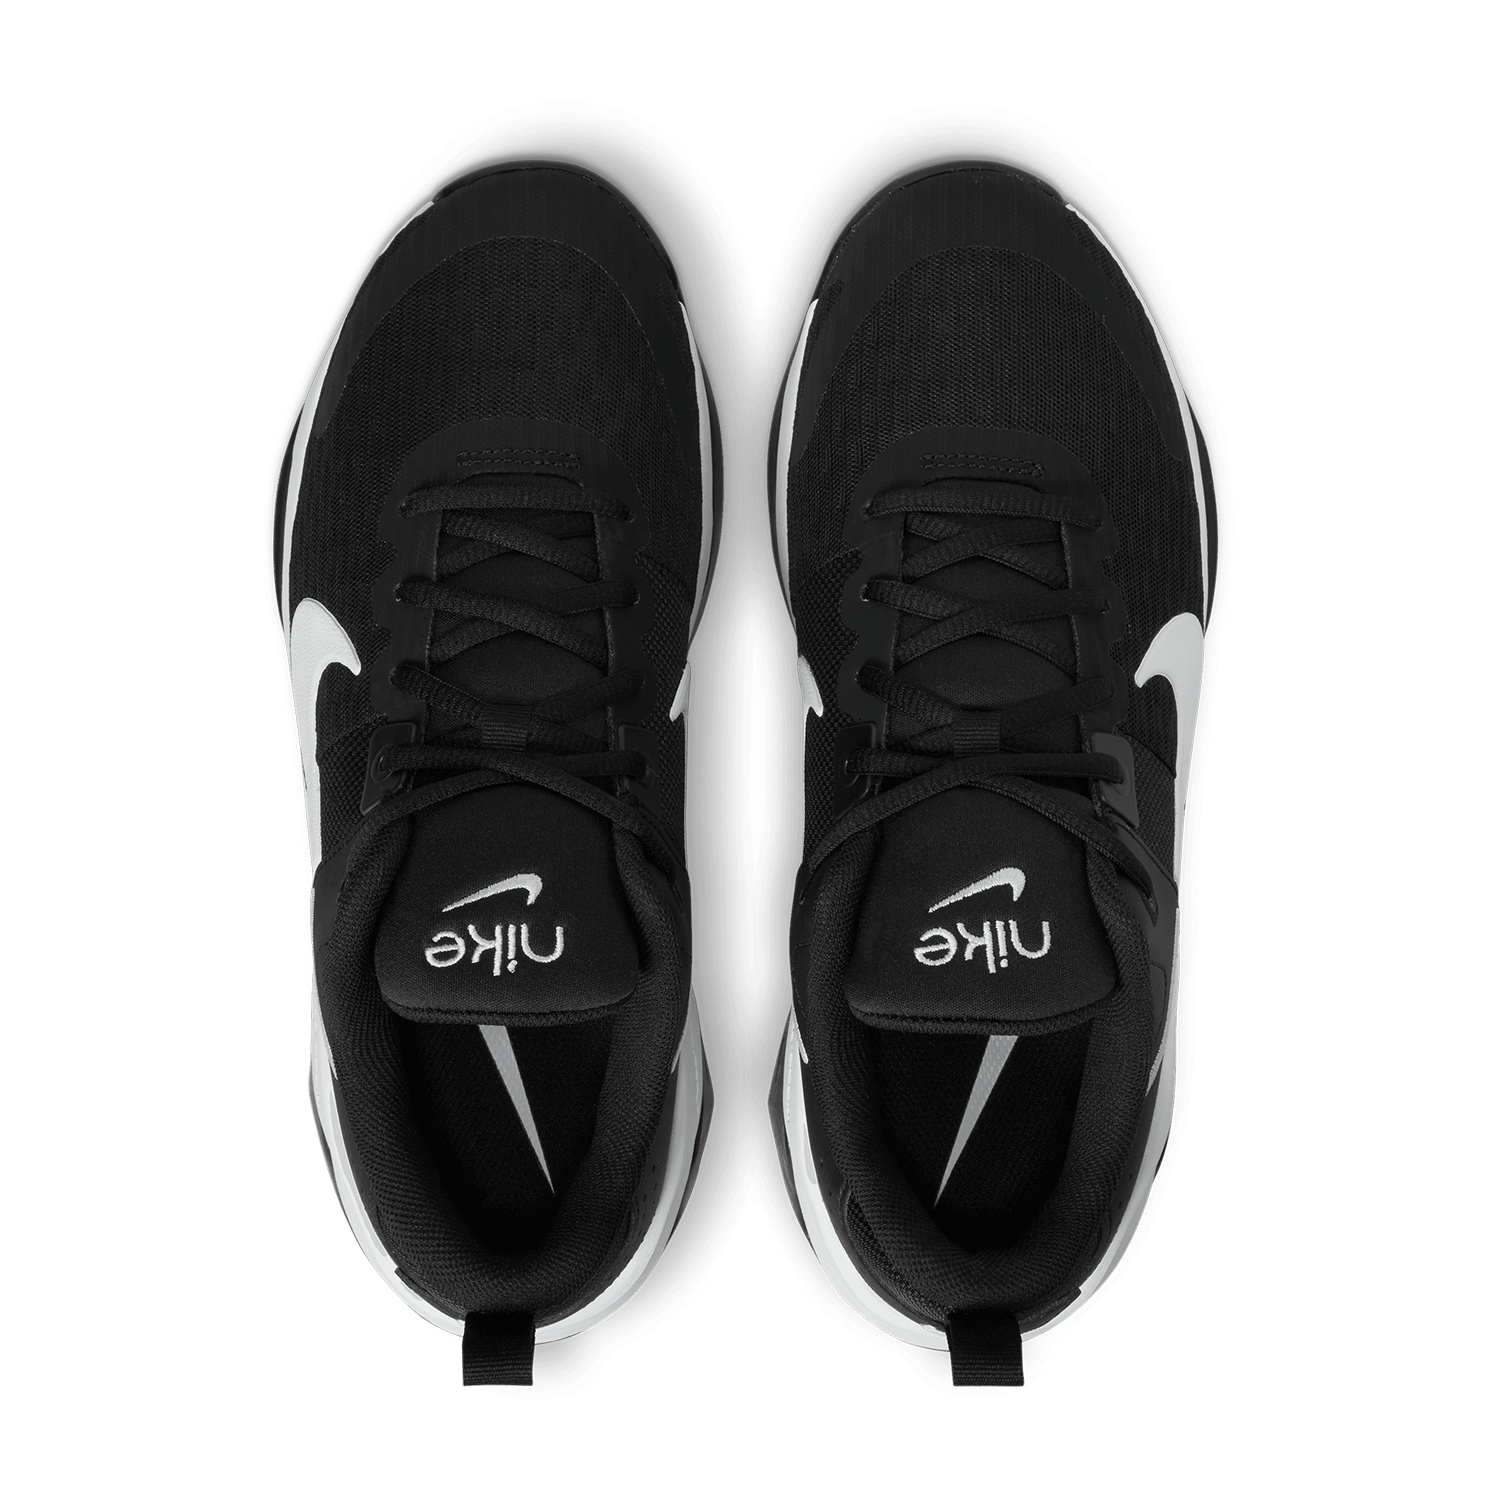 Nike Zoom Bella 6 - Black/White/Anthracite